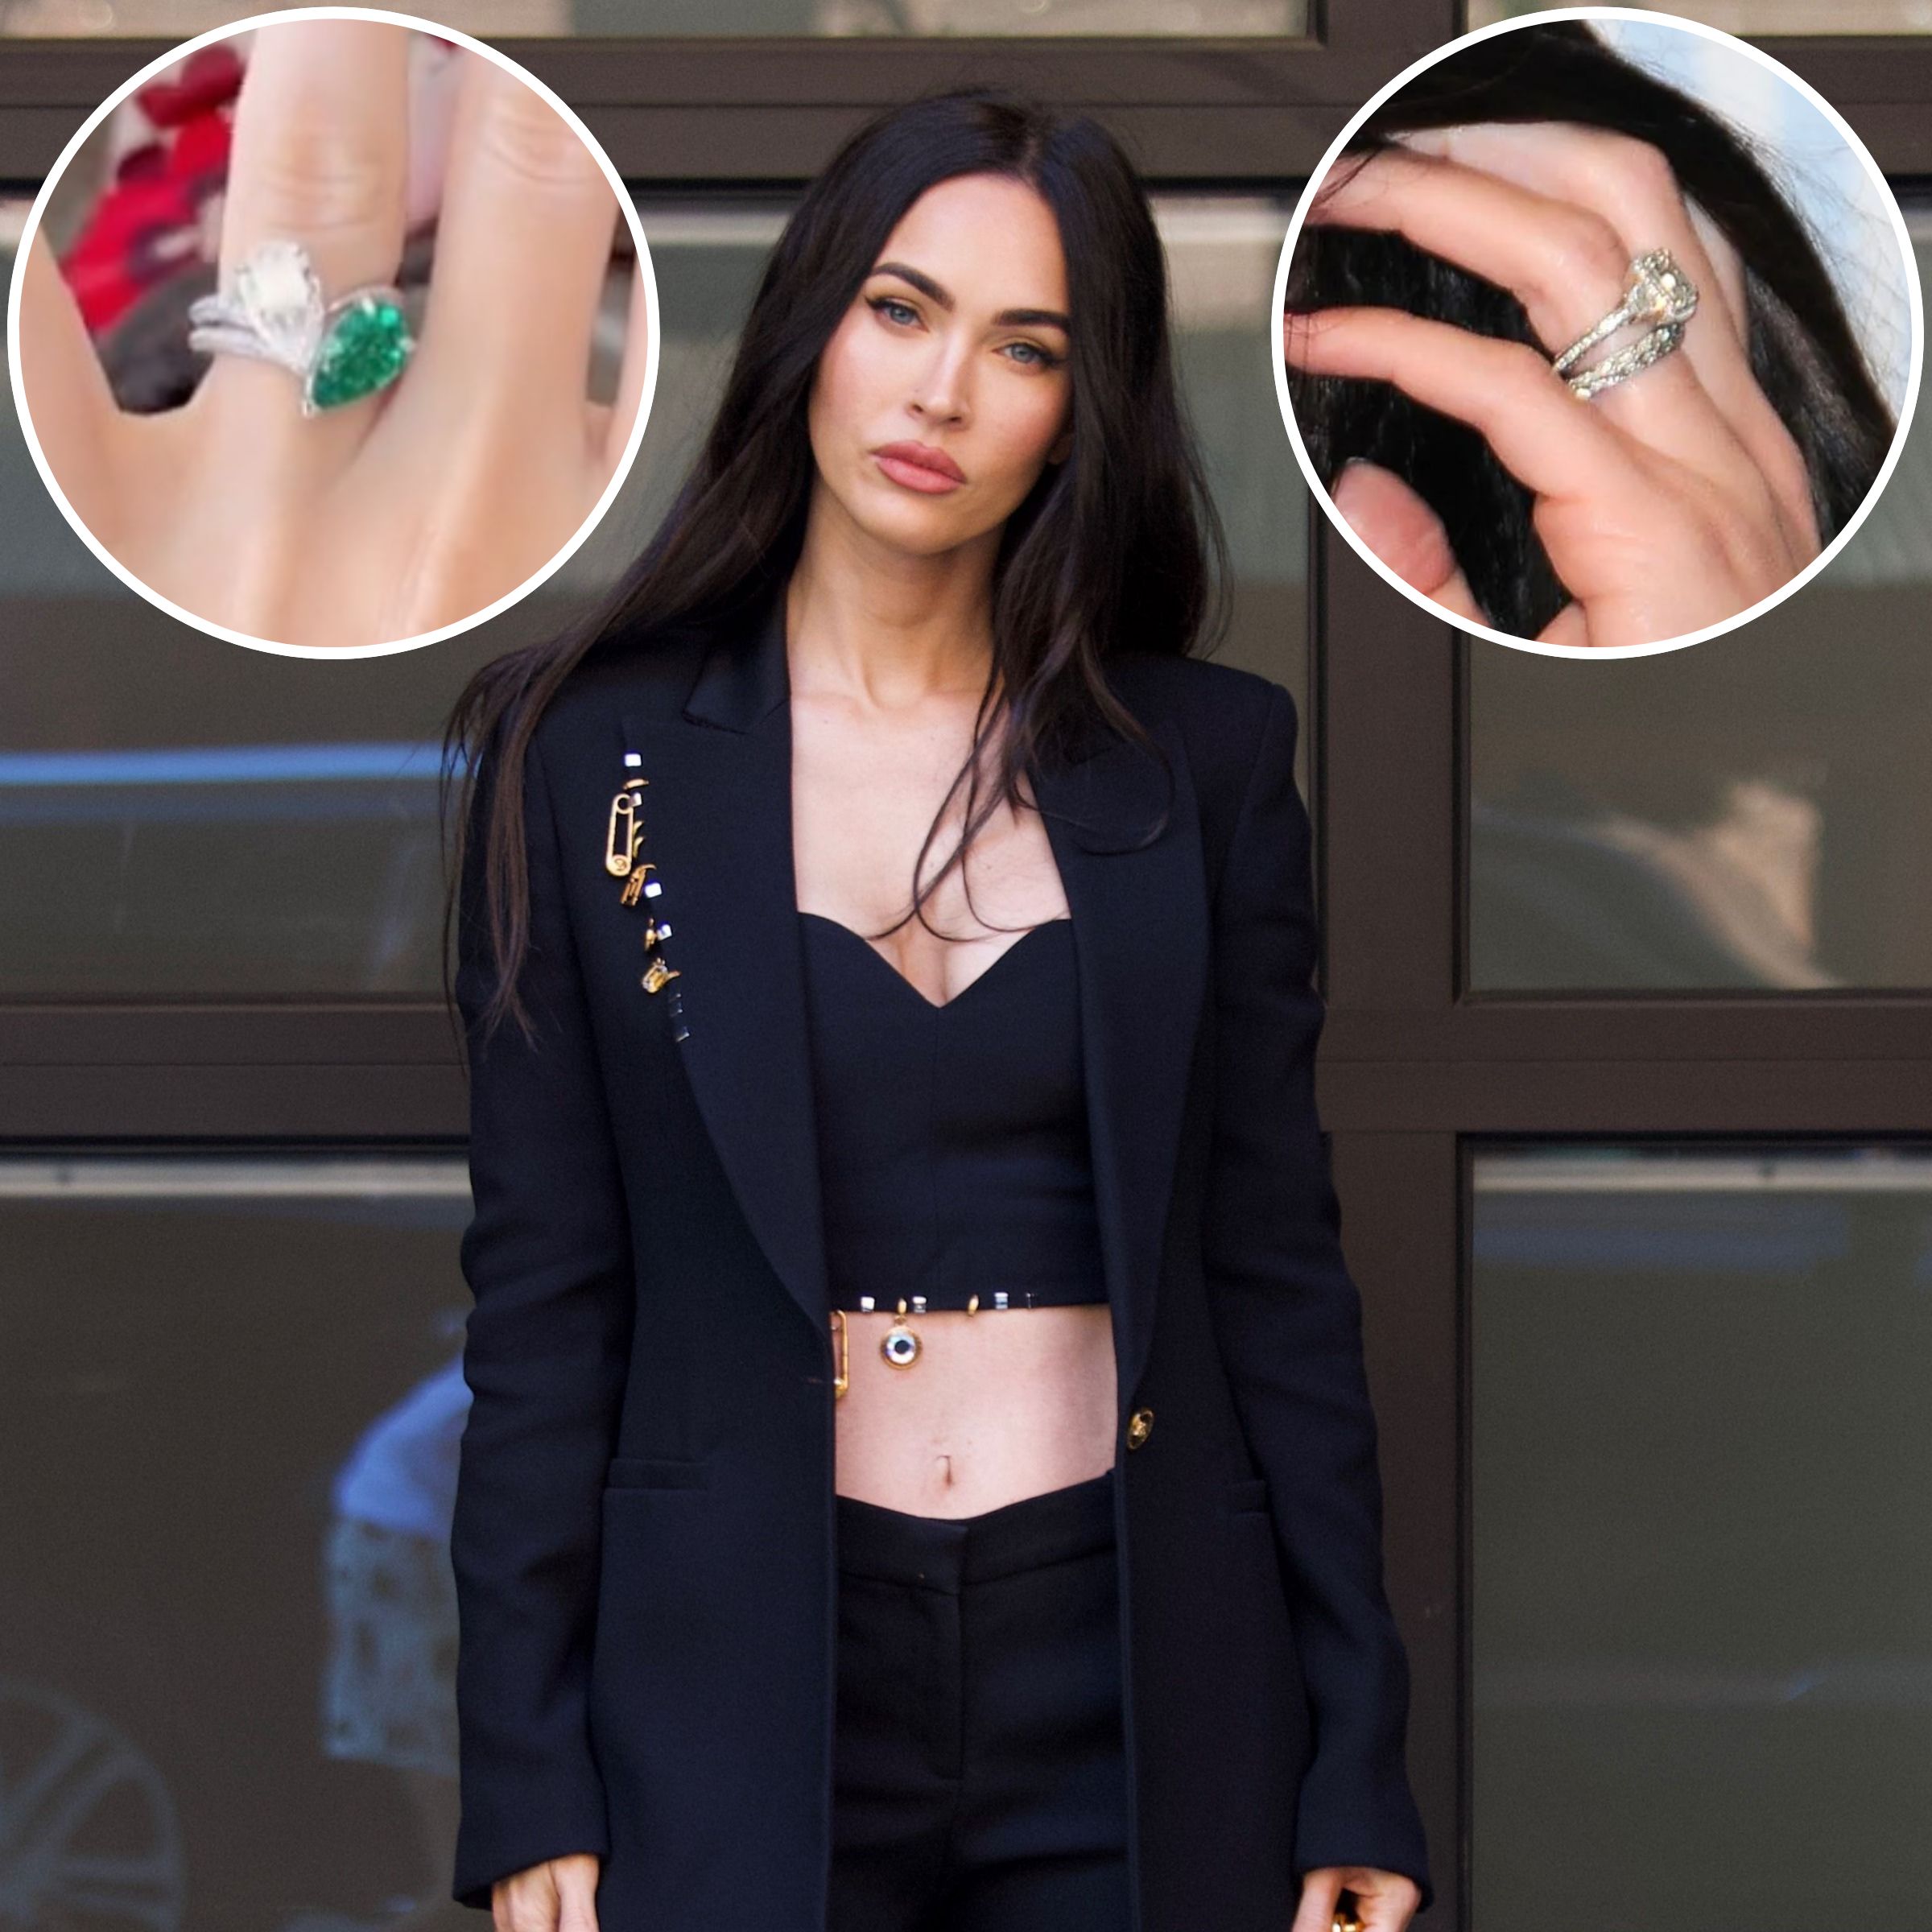 Megan Fox, MGK Have an Odd BDSM-Inspired Engagement Ring - Rare